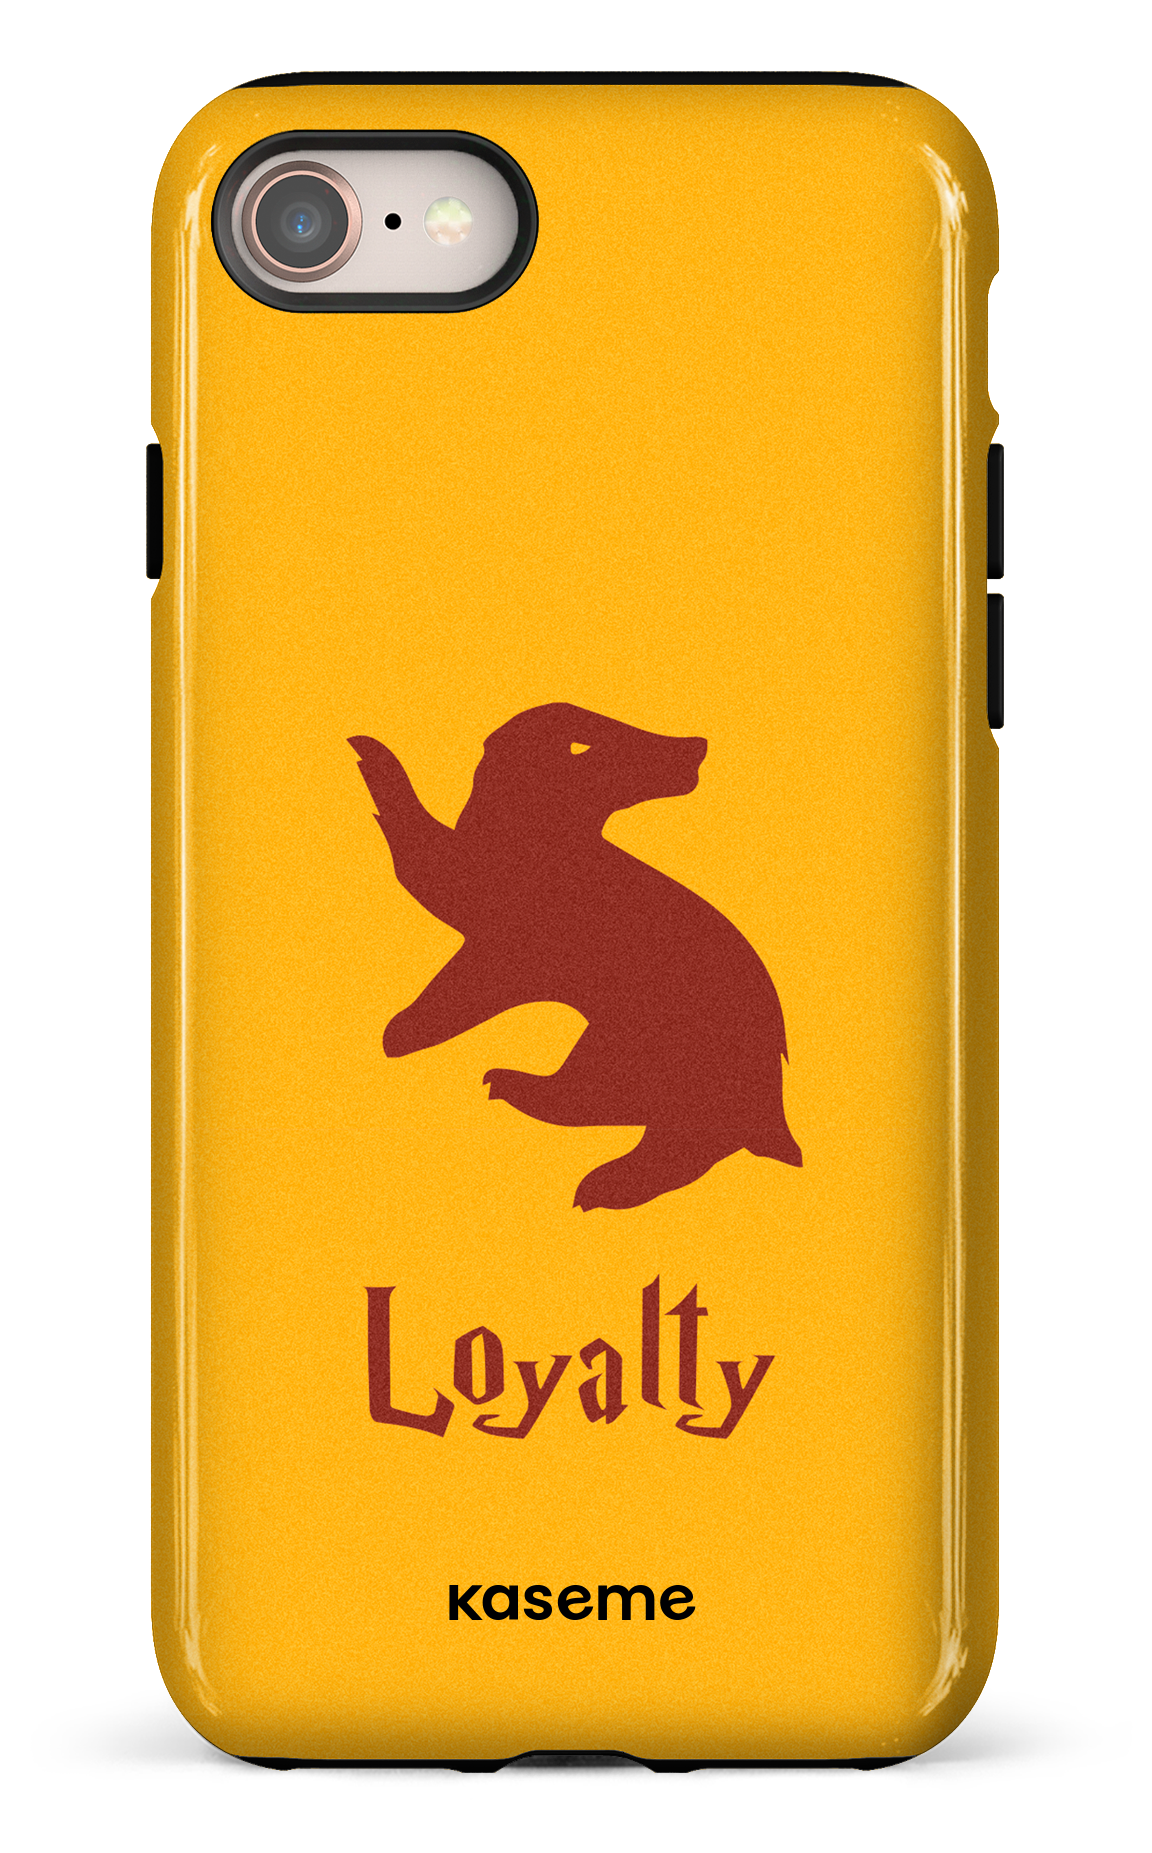 Loyalty - iPhone 7